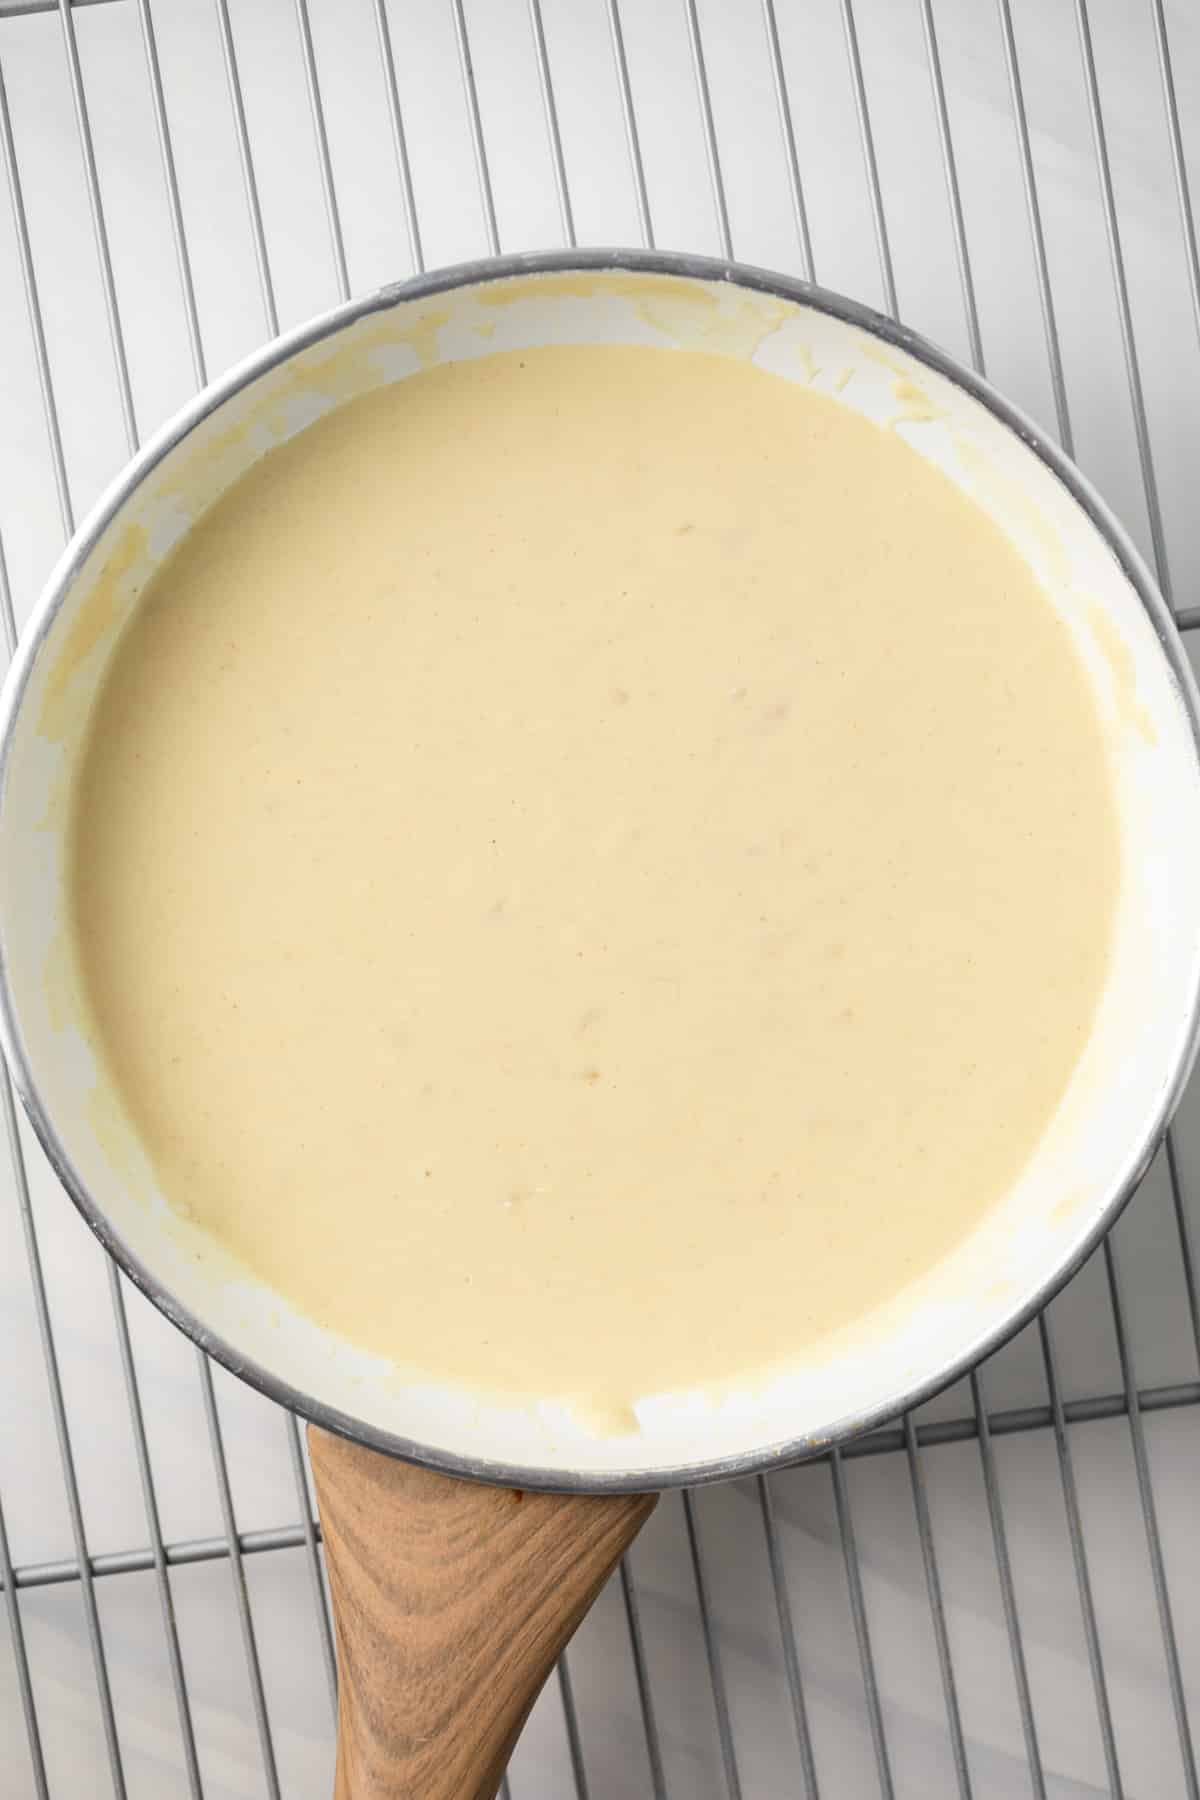 Dijon mustard sauce in saucepan.